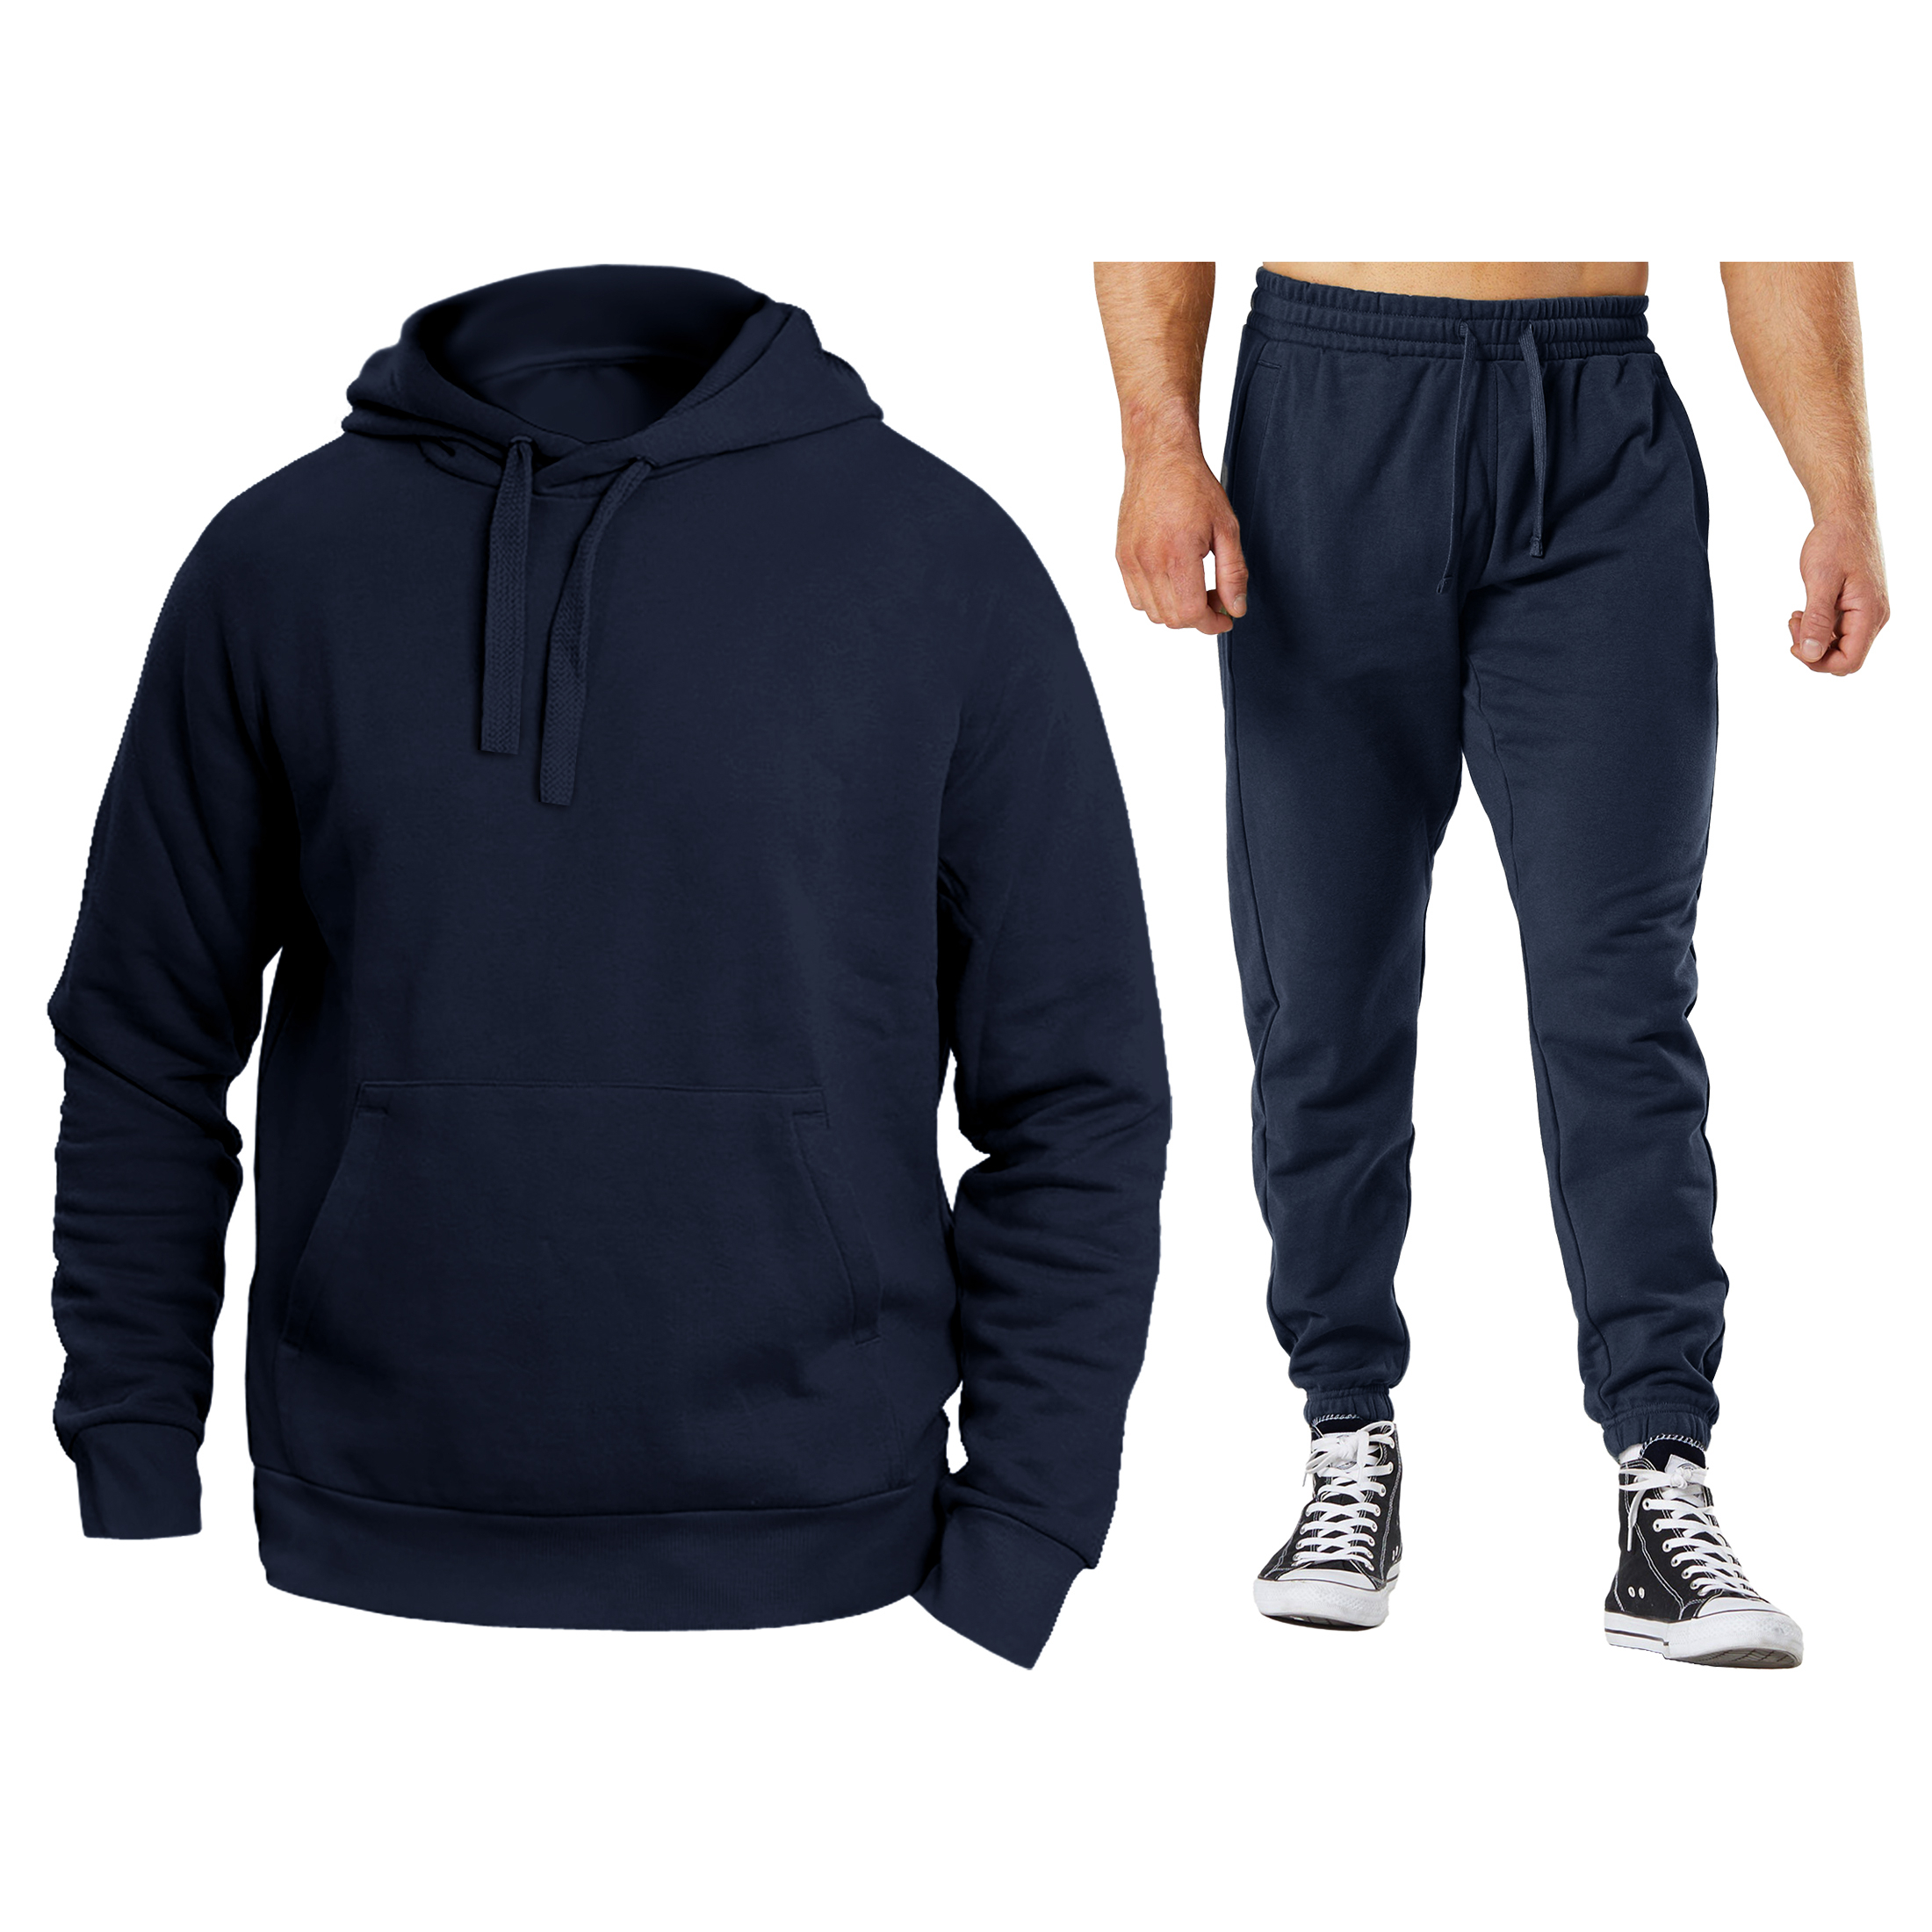 Men's Athletic Warm Jogging Pullover Active Sweatsuit - Navy, Medium